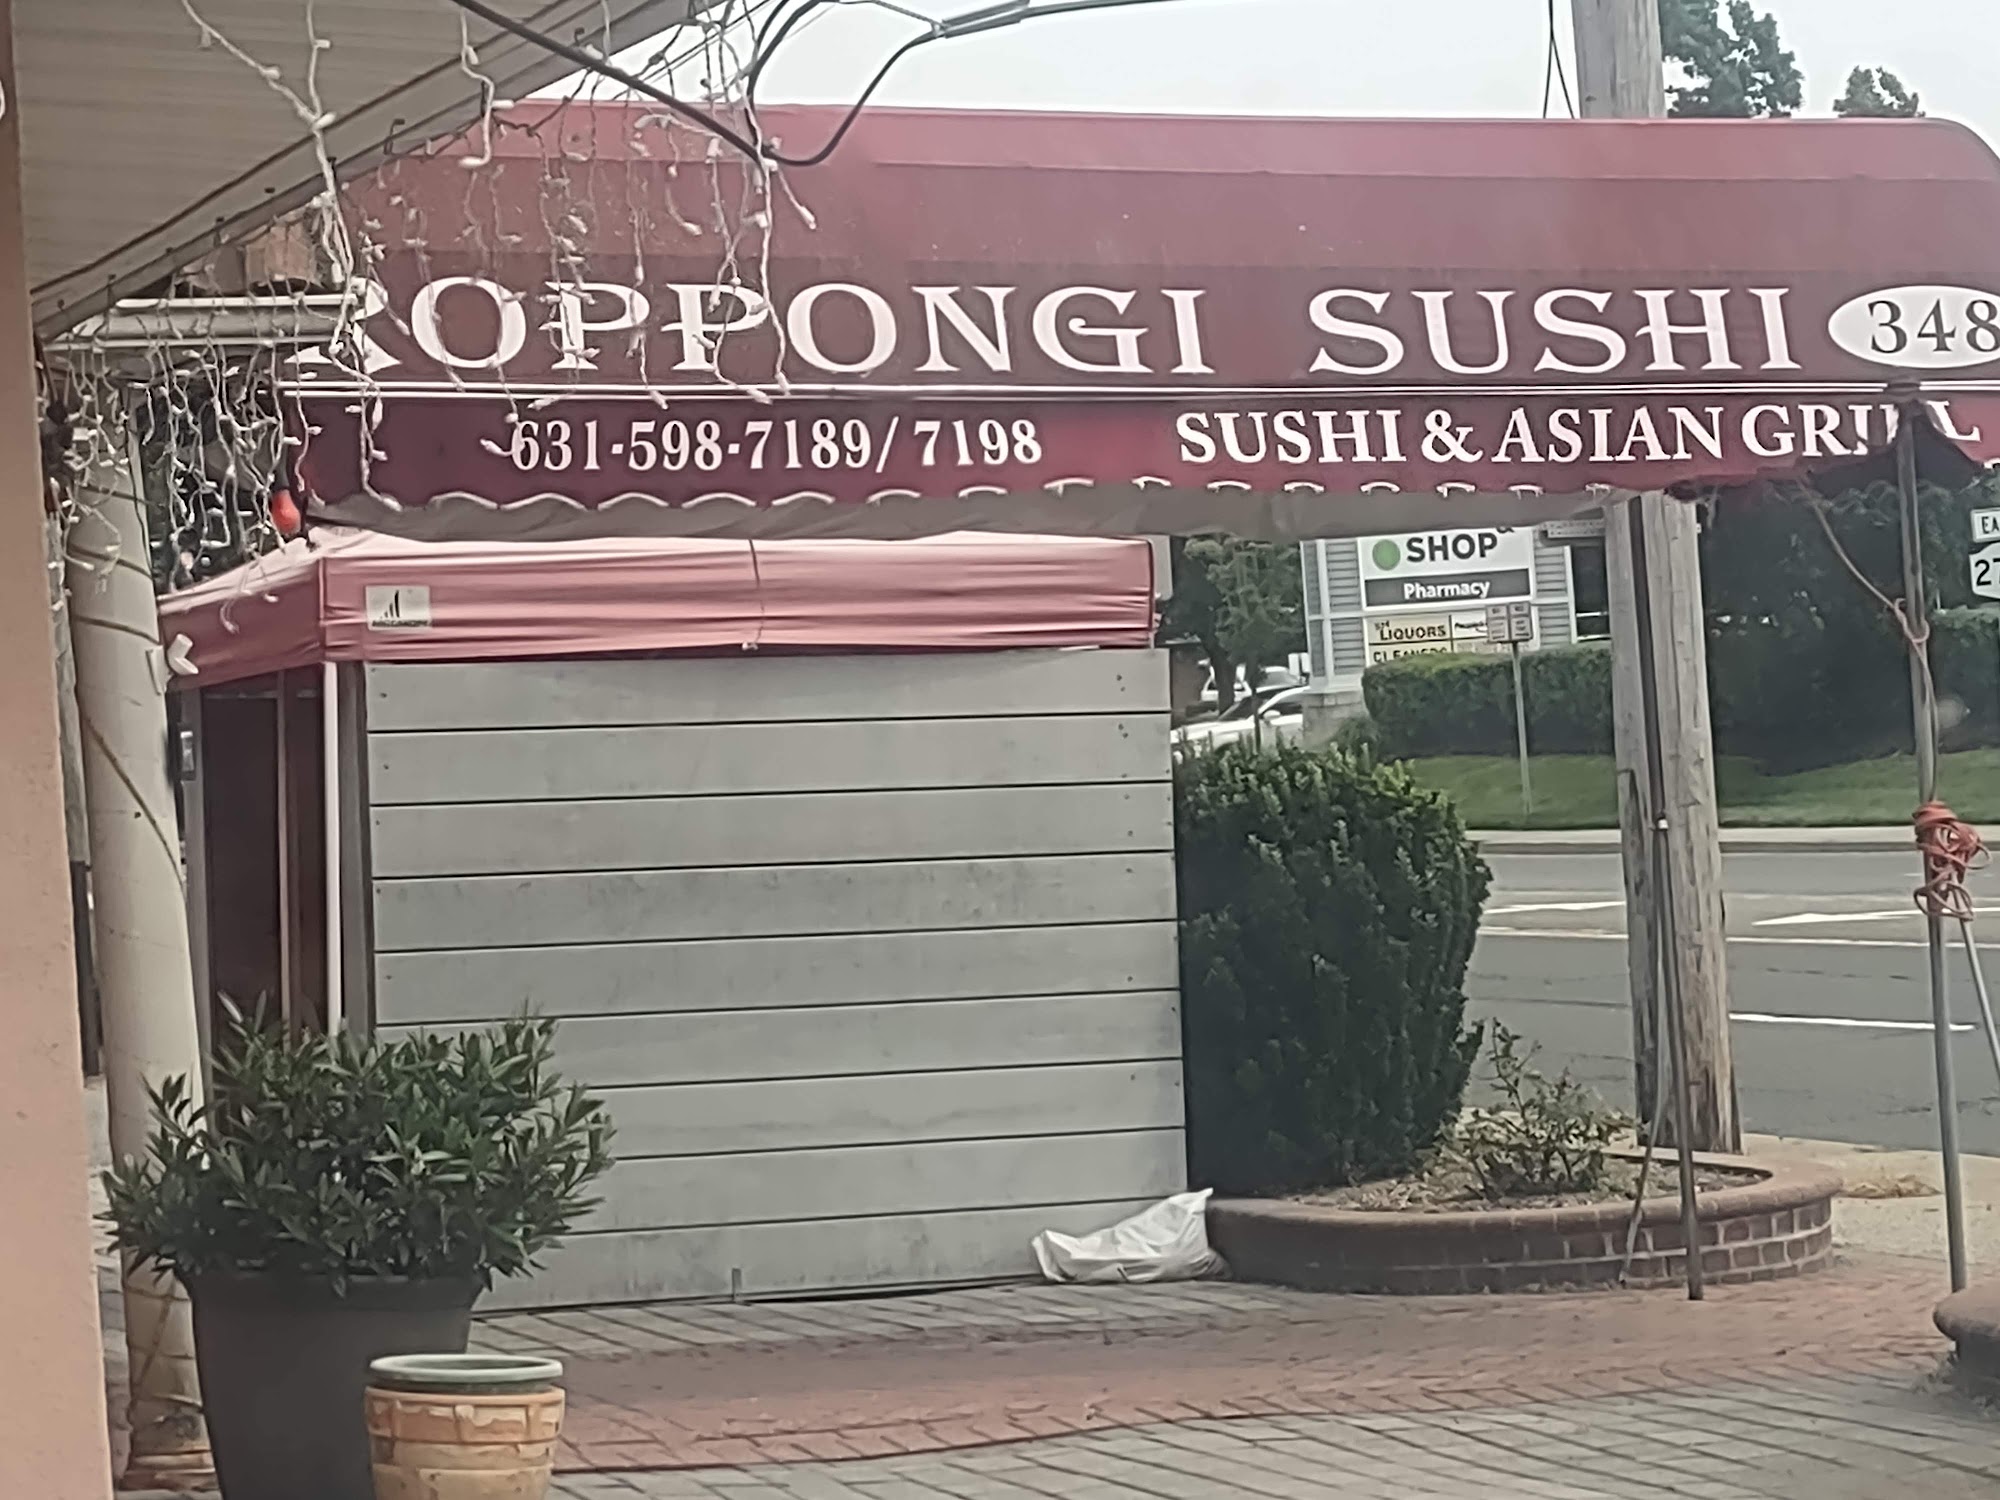 Roppongi Sushi Restaurant